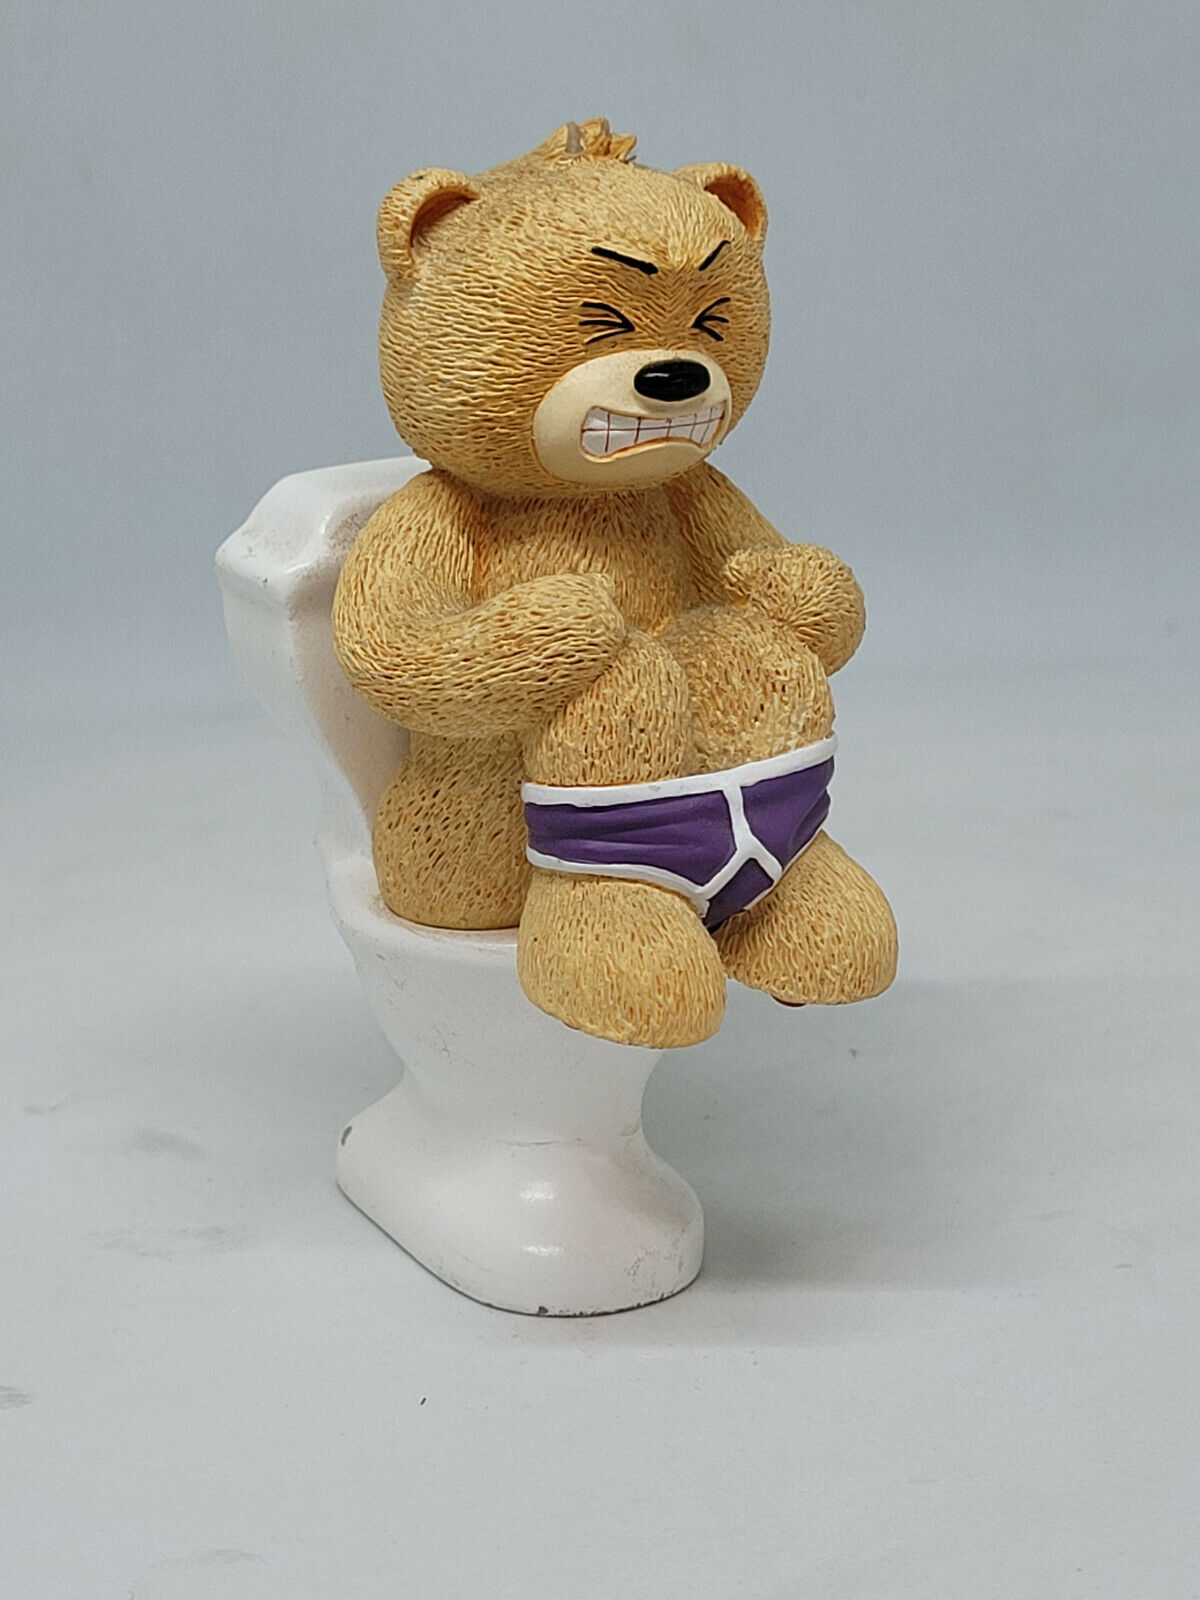 Bad Taste Bears - Louie #19 - Retired - On The Toilet Wearing Jockey Shorts